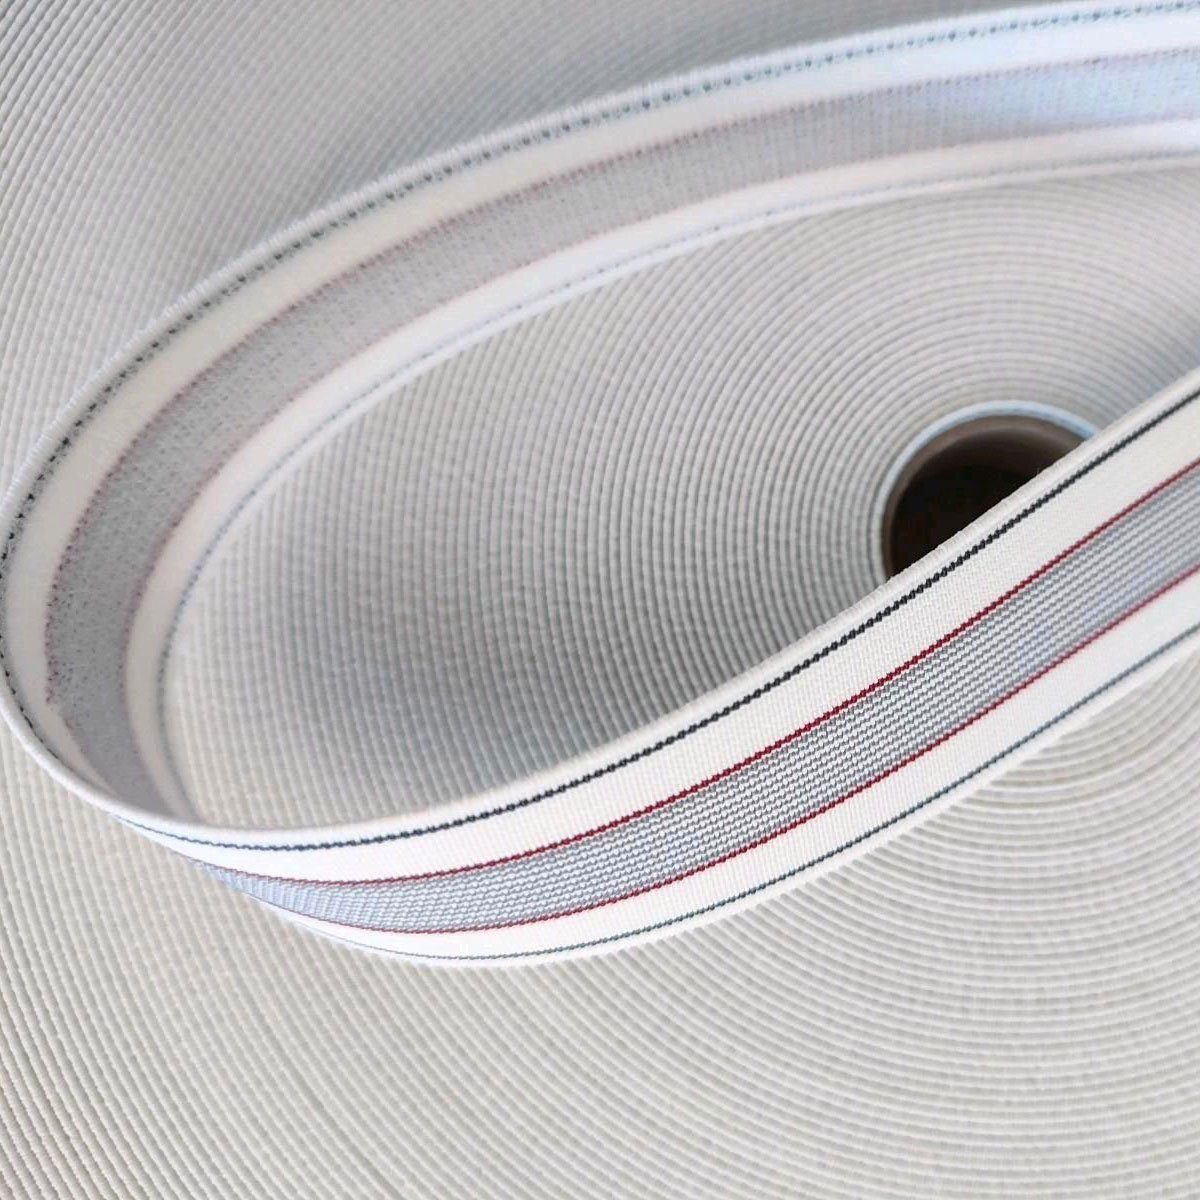 larissastoffe Gummiband 10 m Gummiband Elastikband 30 mm breit weiß